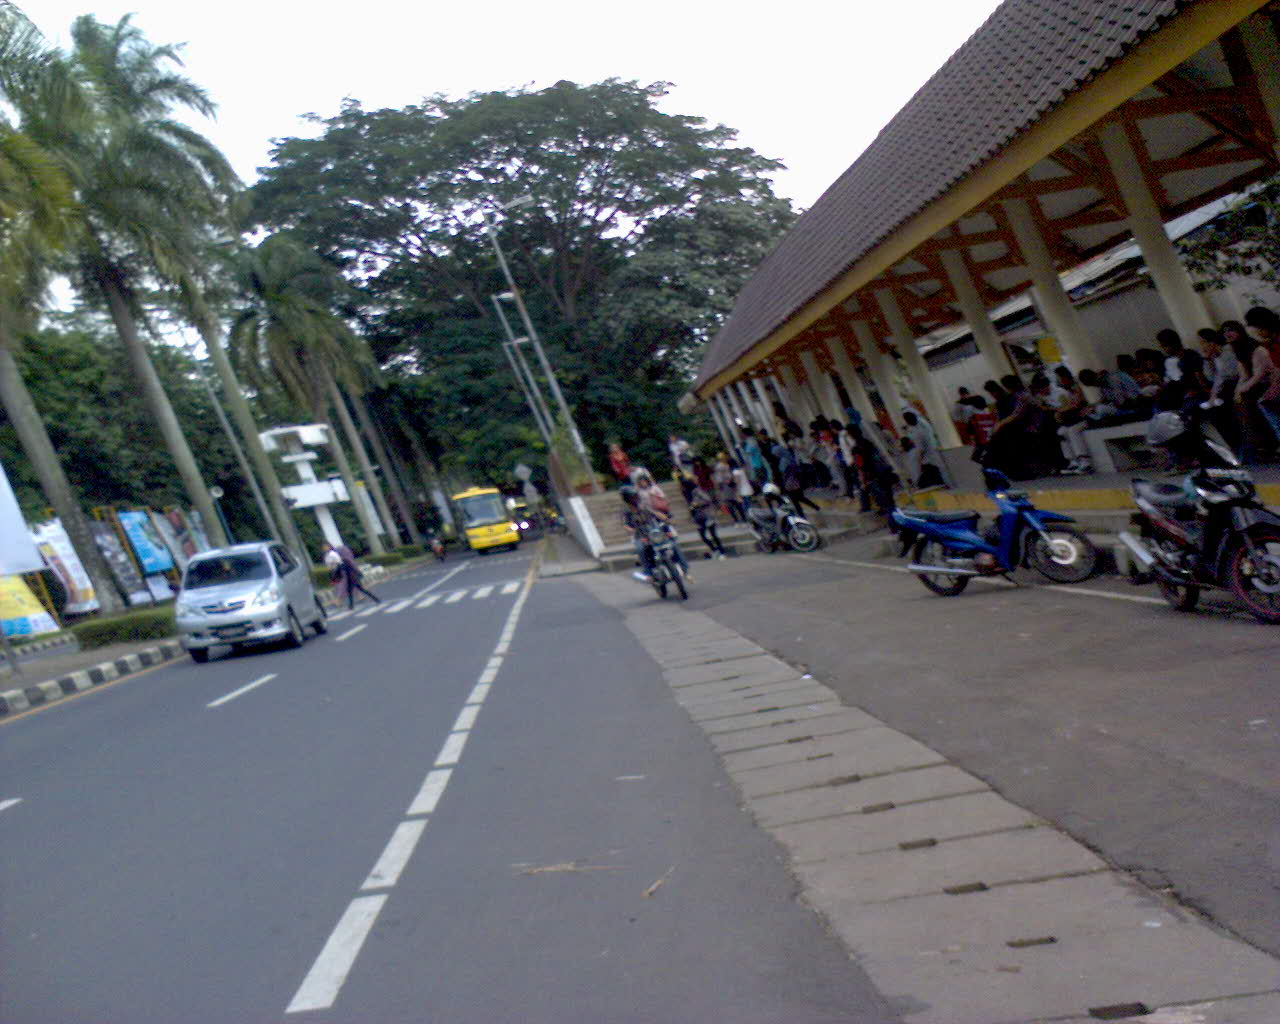 Stasiun universitas indonesia